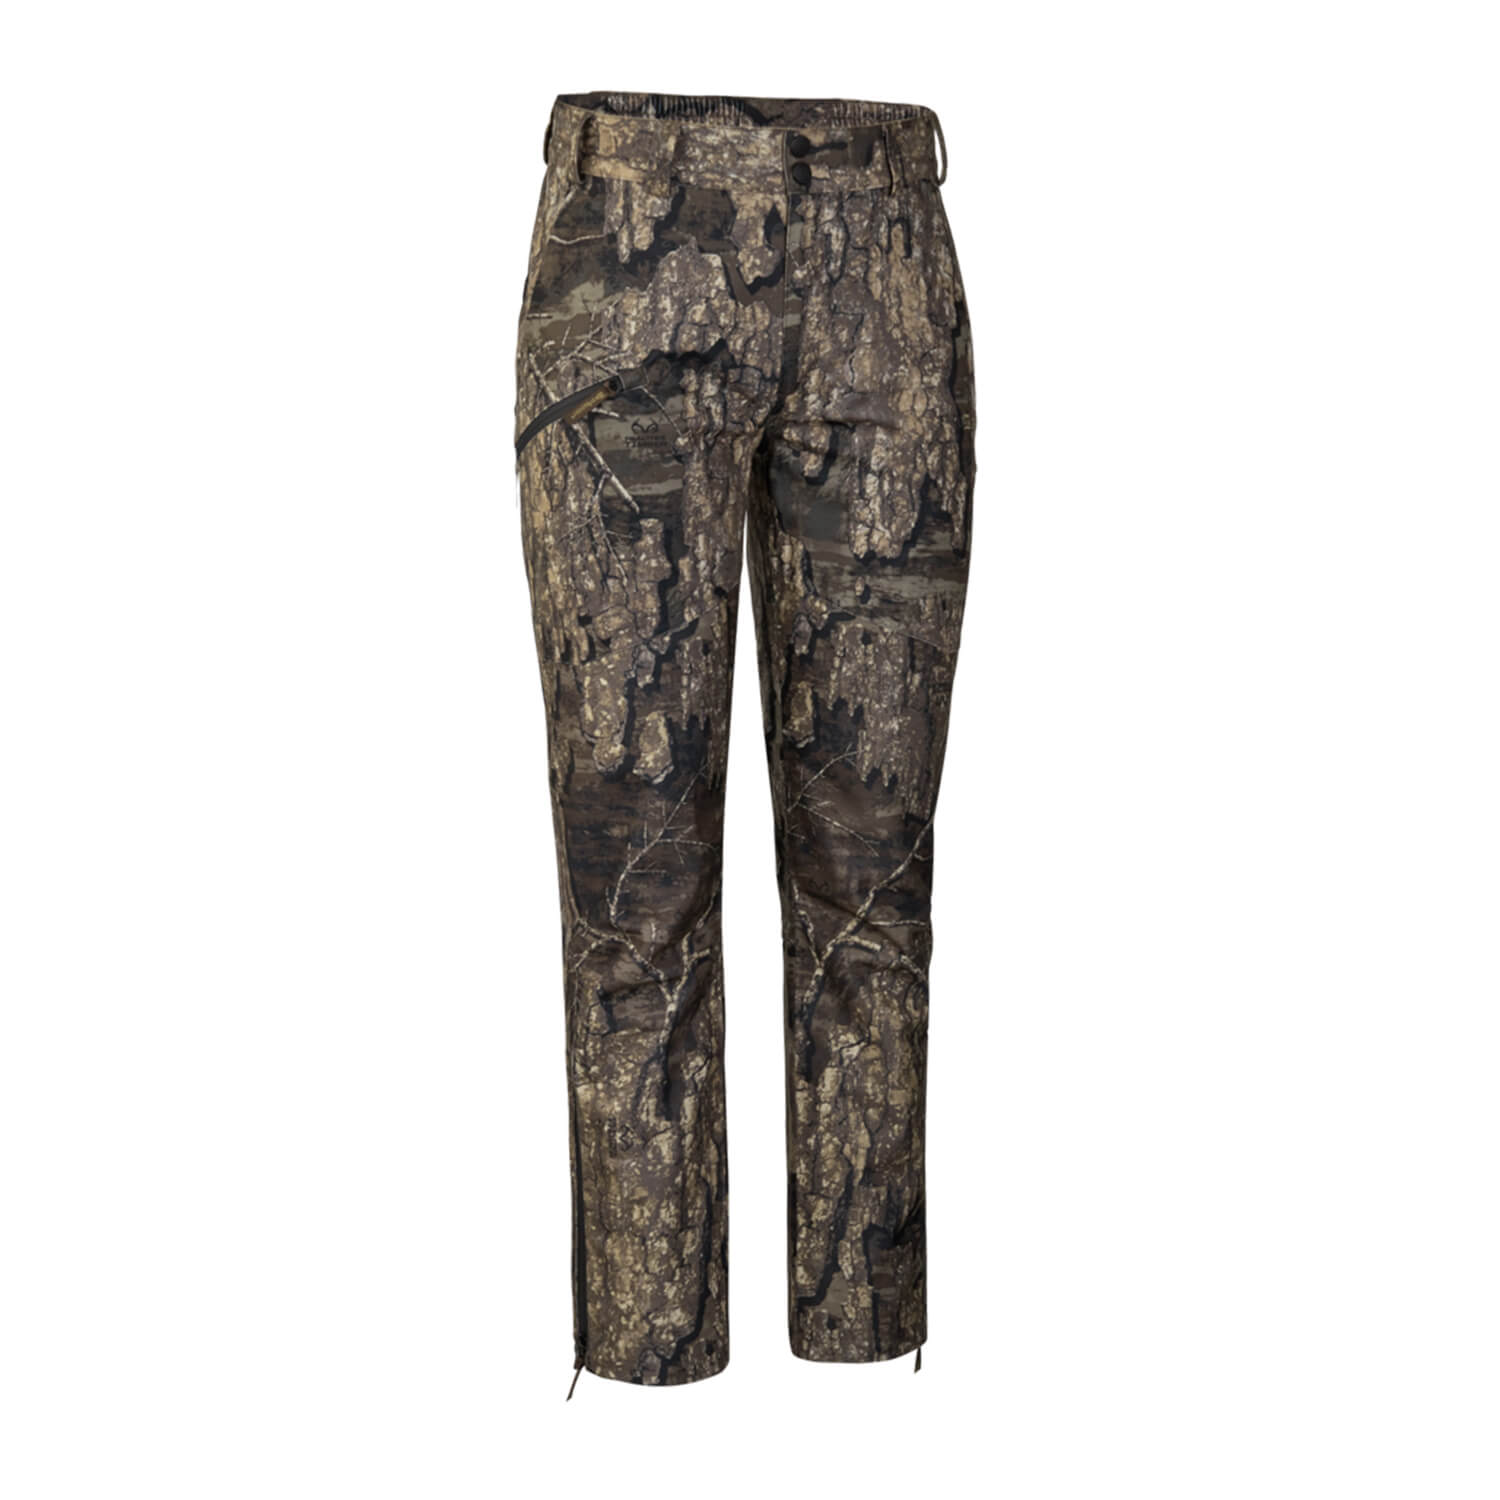 Deerhunter trousers Pro Gamekeeper (Realtree Timber) - Hunting Trousers